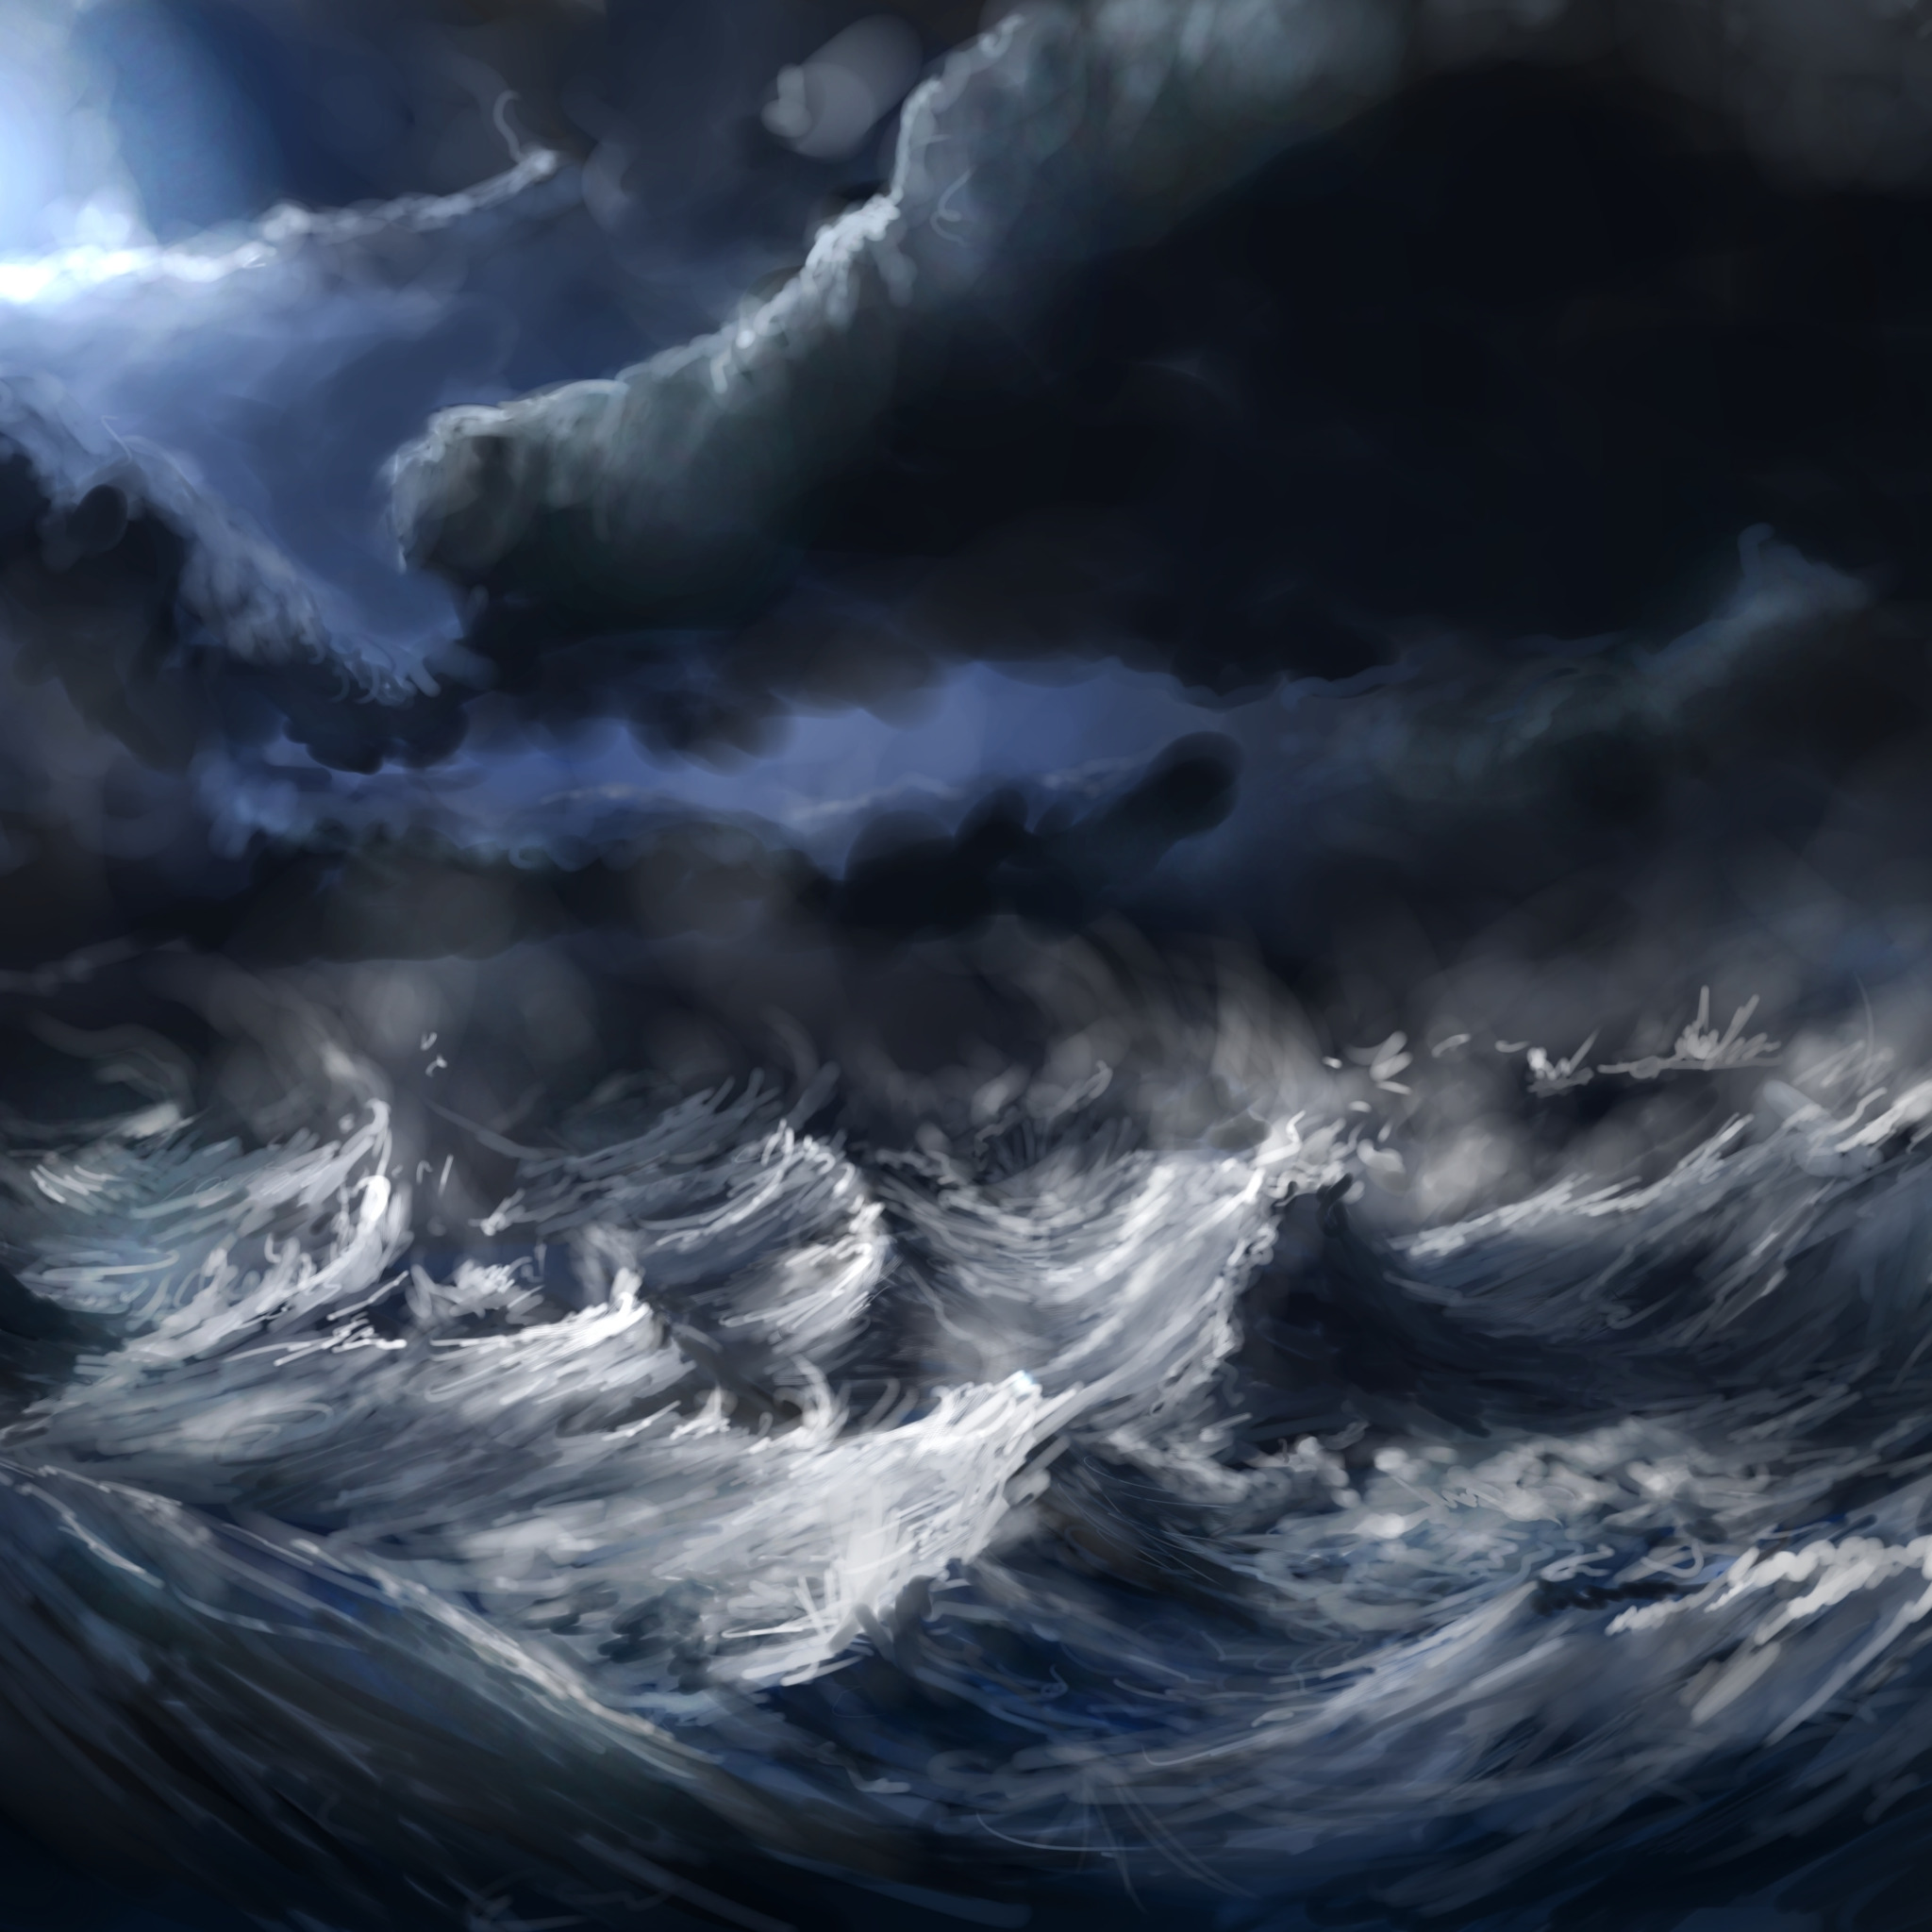 Как ты понимаешь значение шторм. Энди Симмонс пейзаж море шторм. Вулкан Креницына волны шторм. Океан ЦУНАМИ шторм гроза. Океан буря шторм.